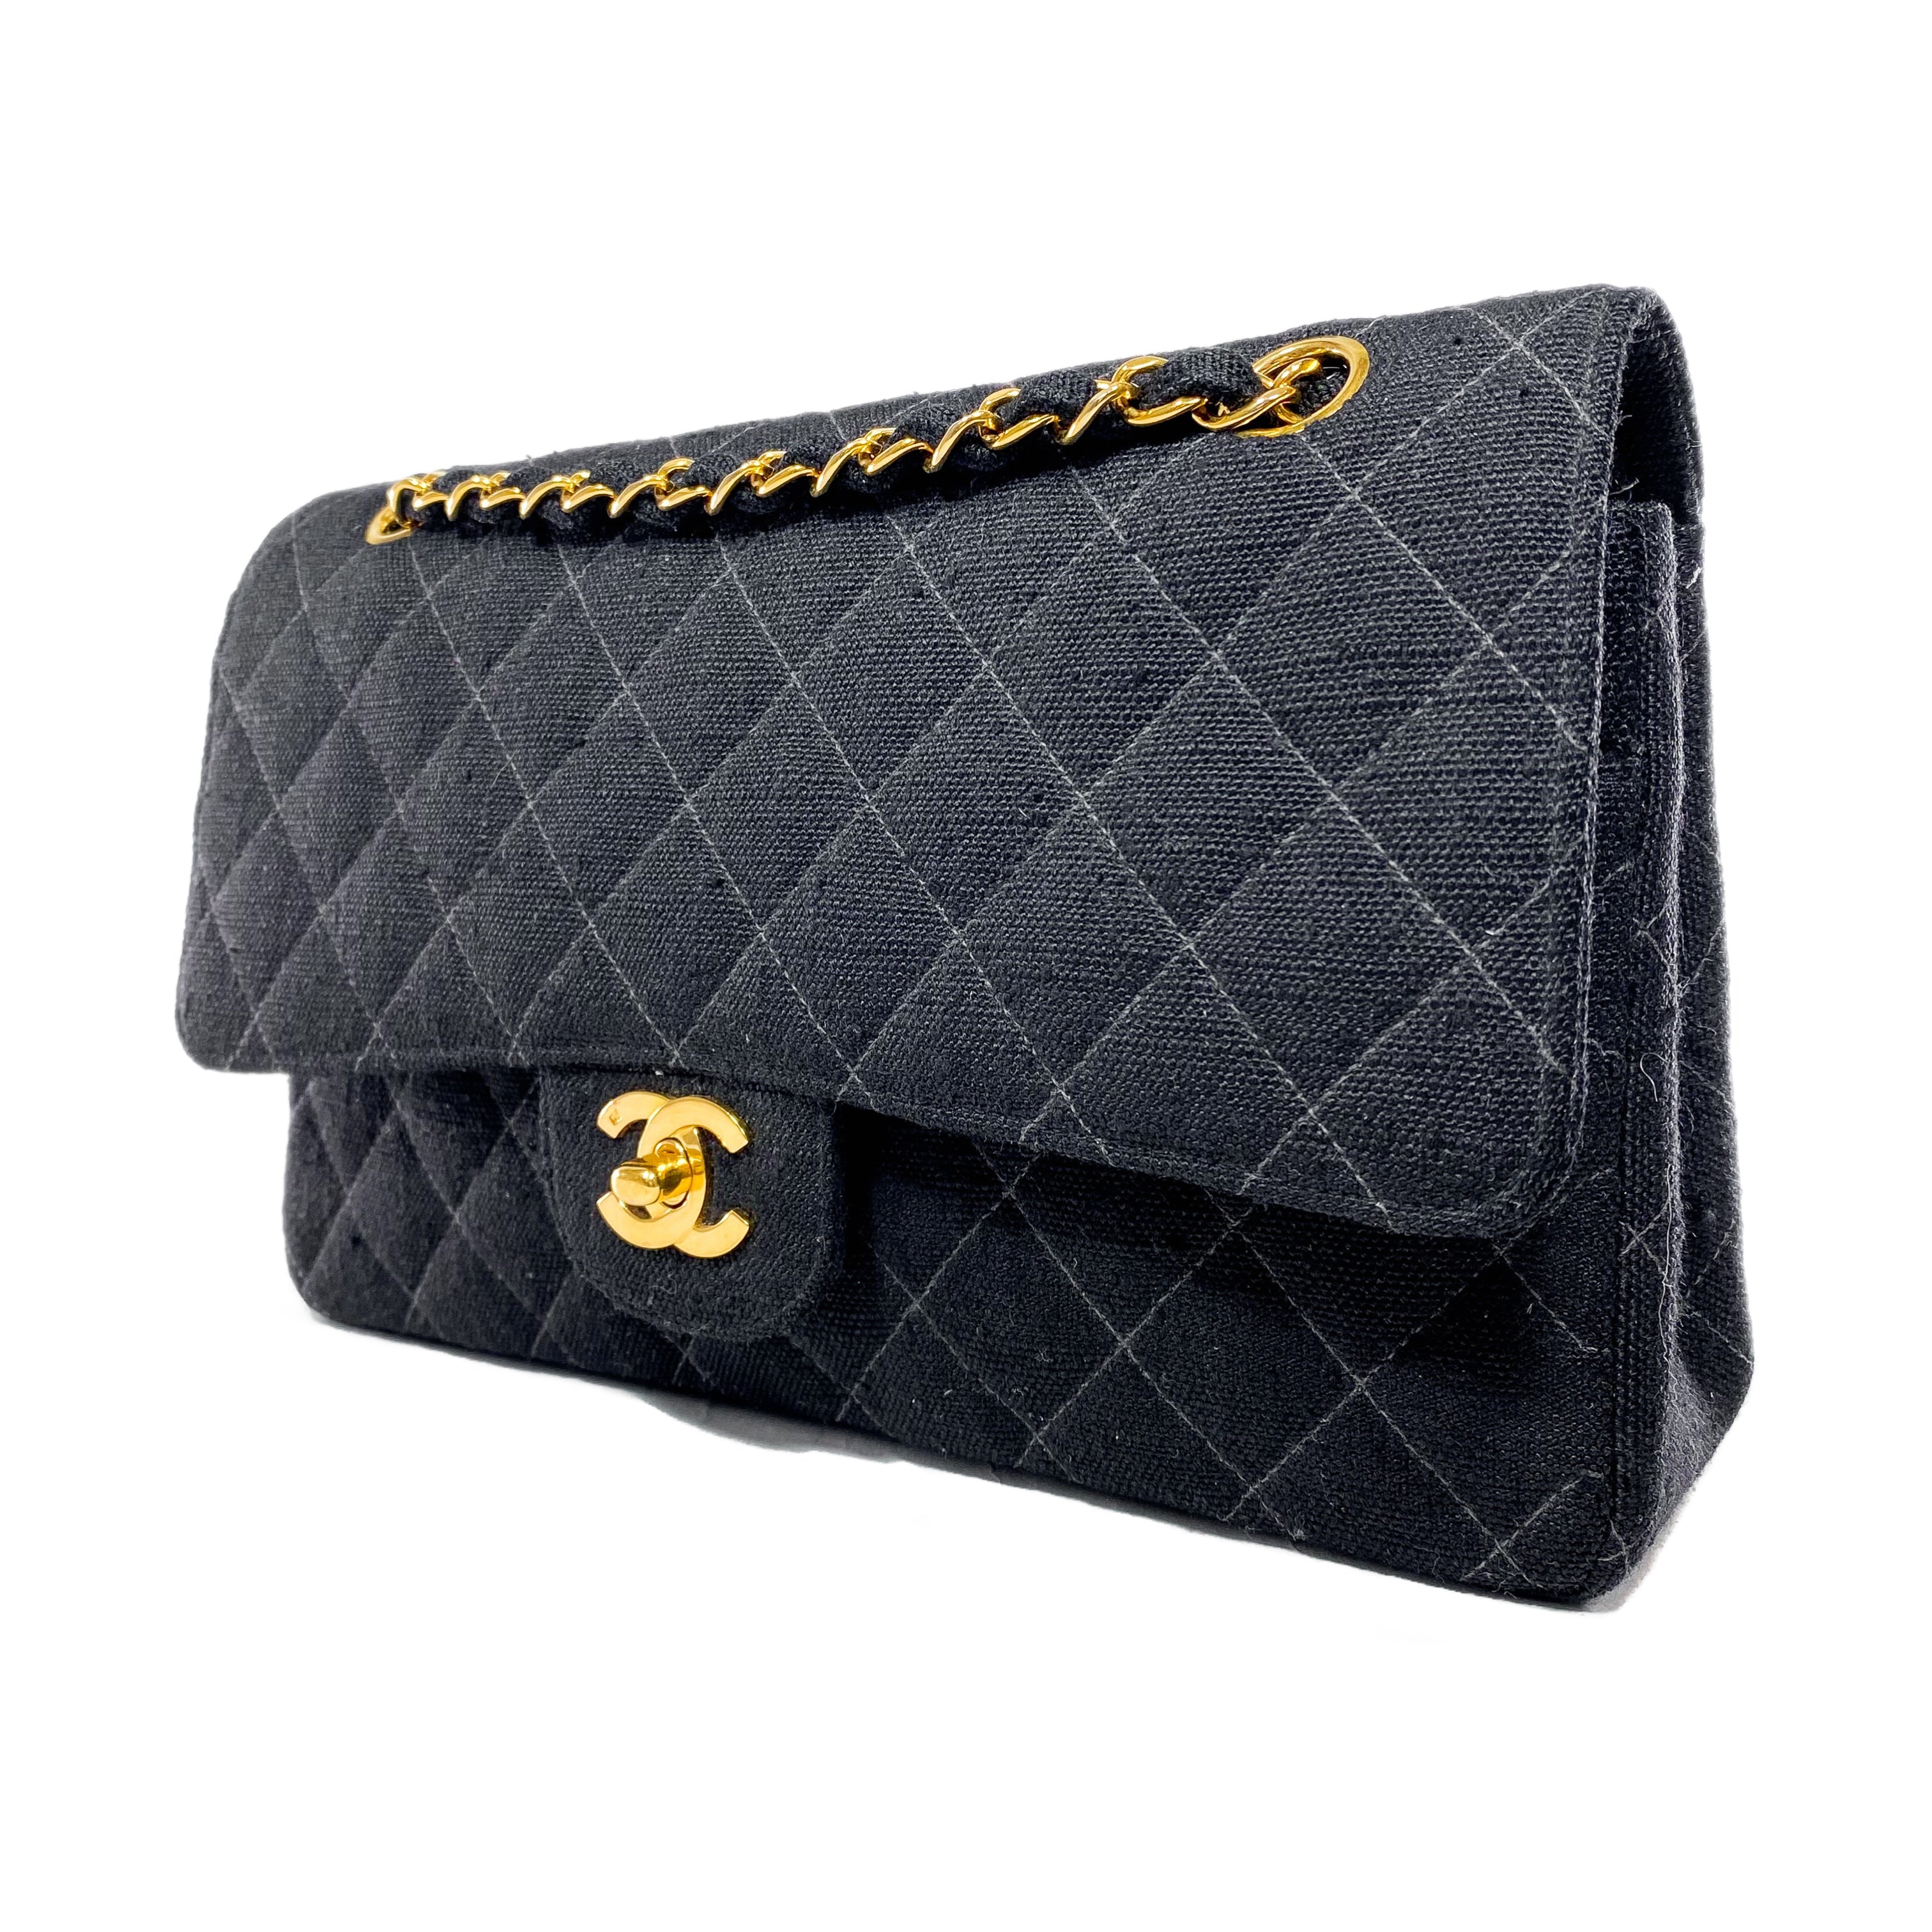 Chanel Black Canvas Medium Double Flap Bag